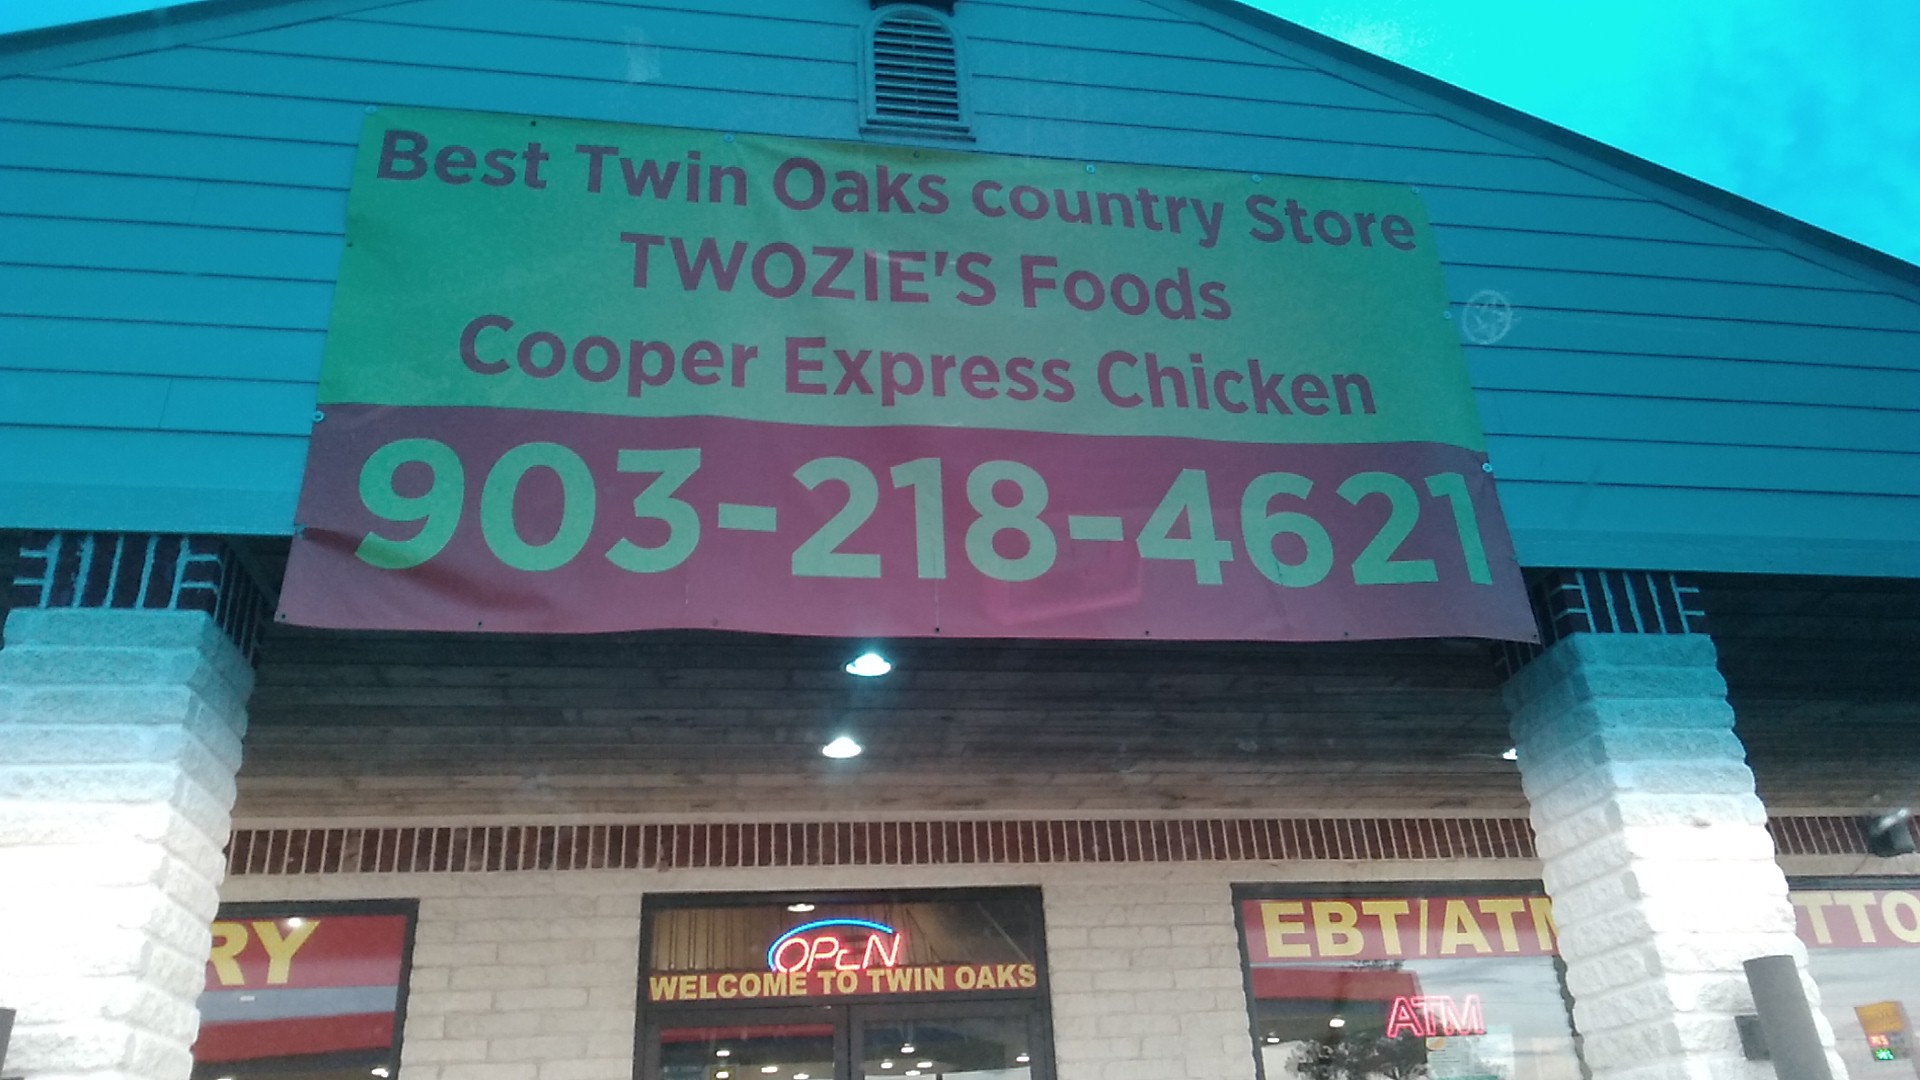 Best Twin Oaks Country Store